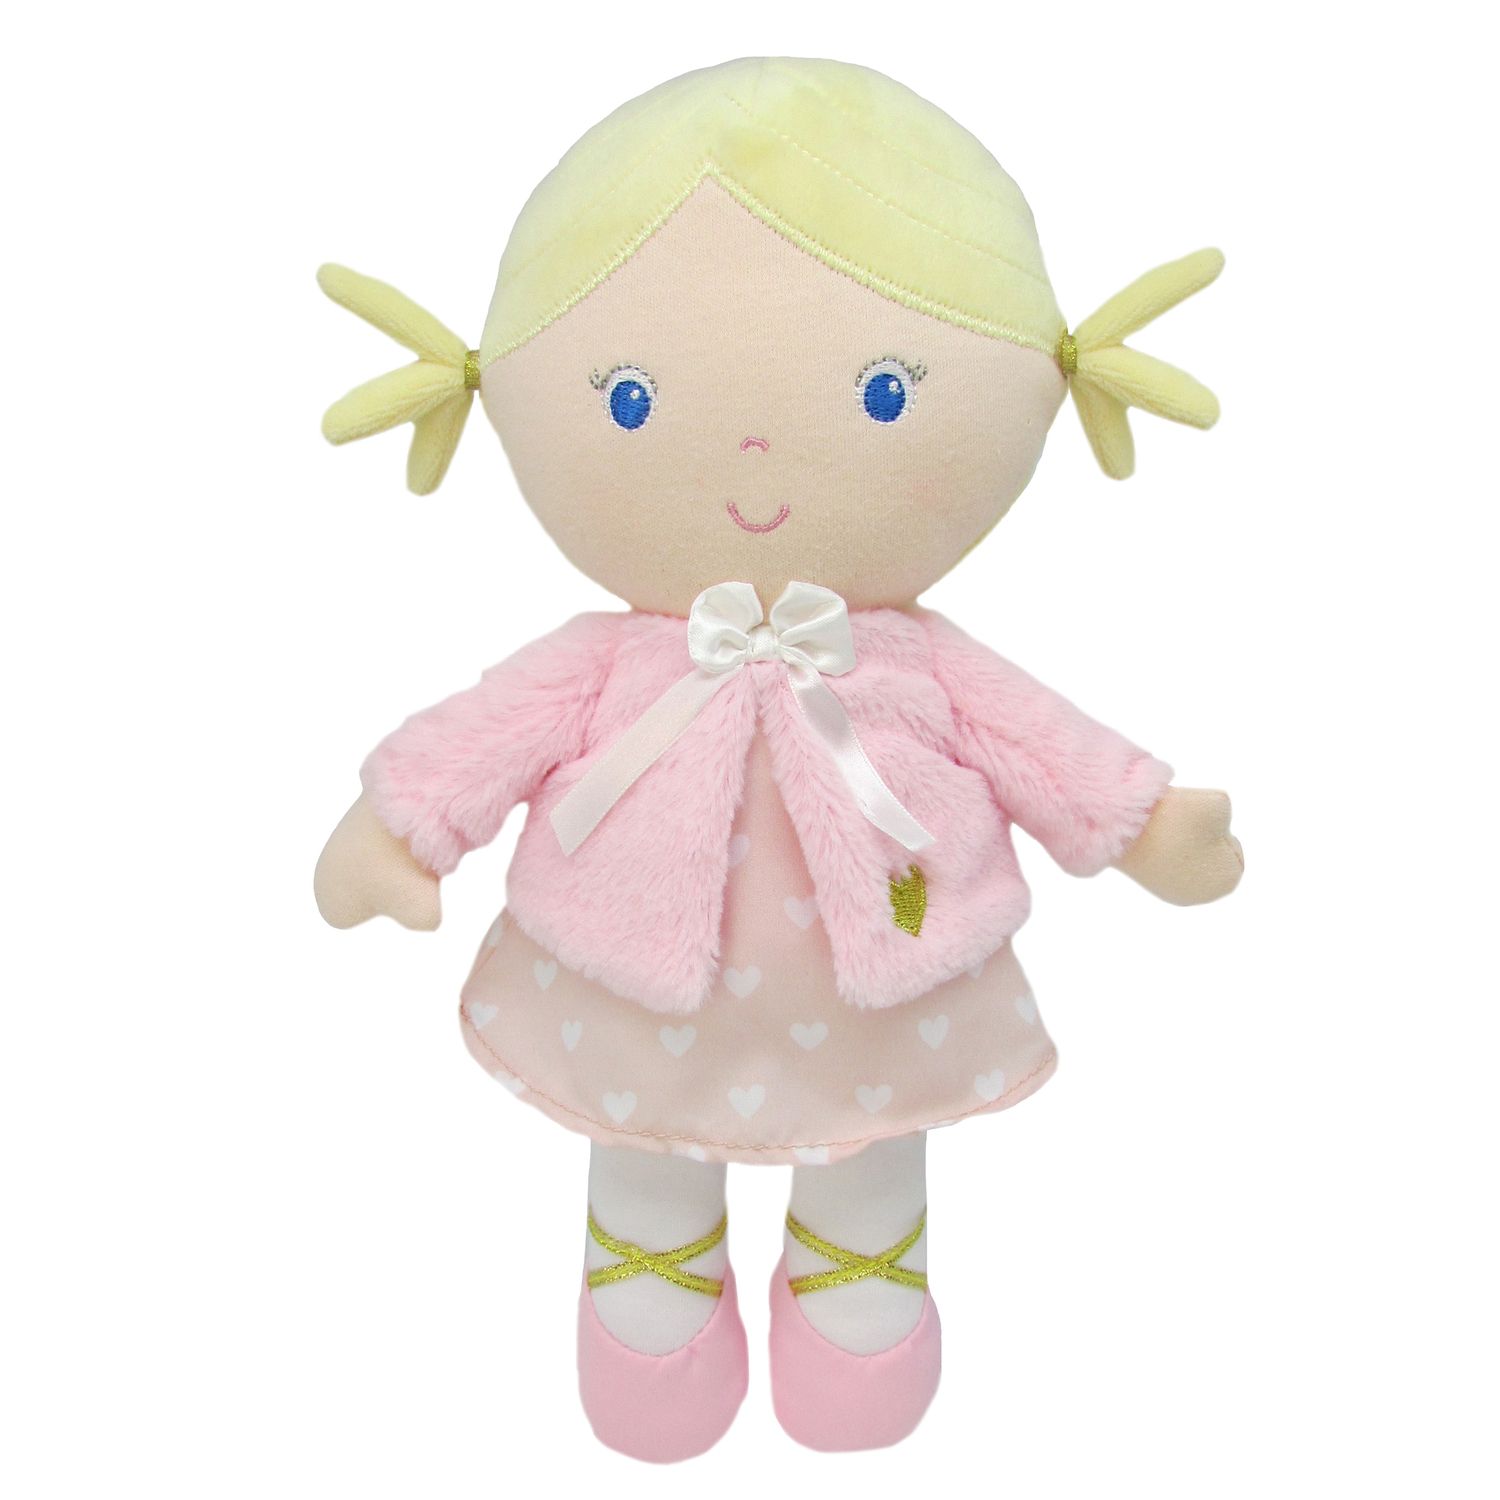 stuffed baby doll